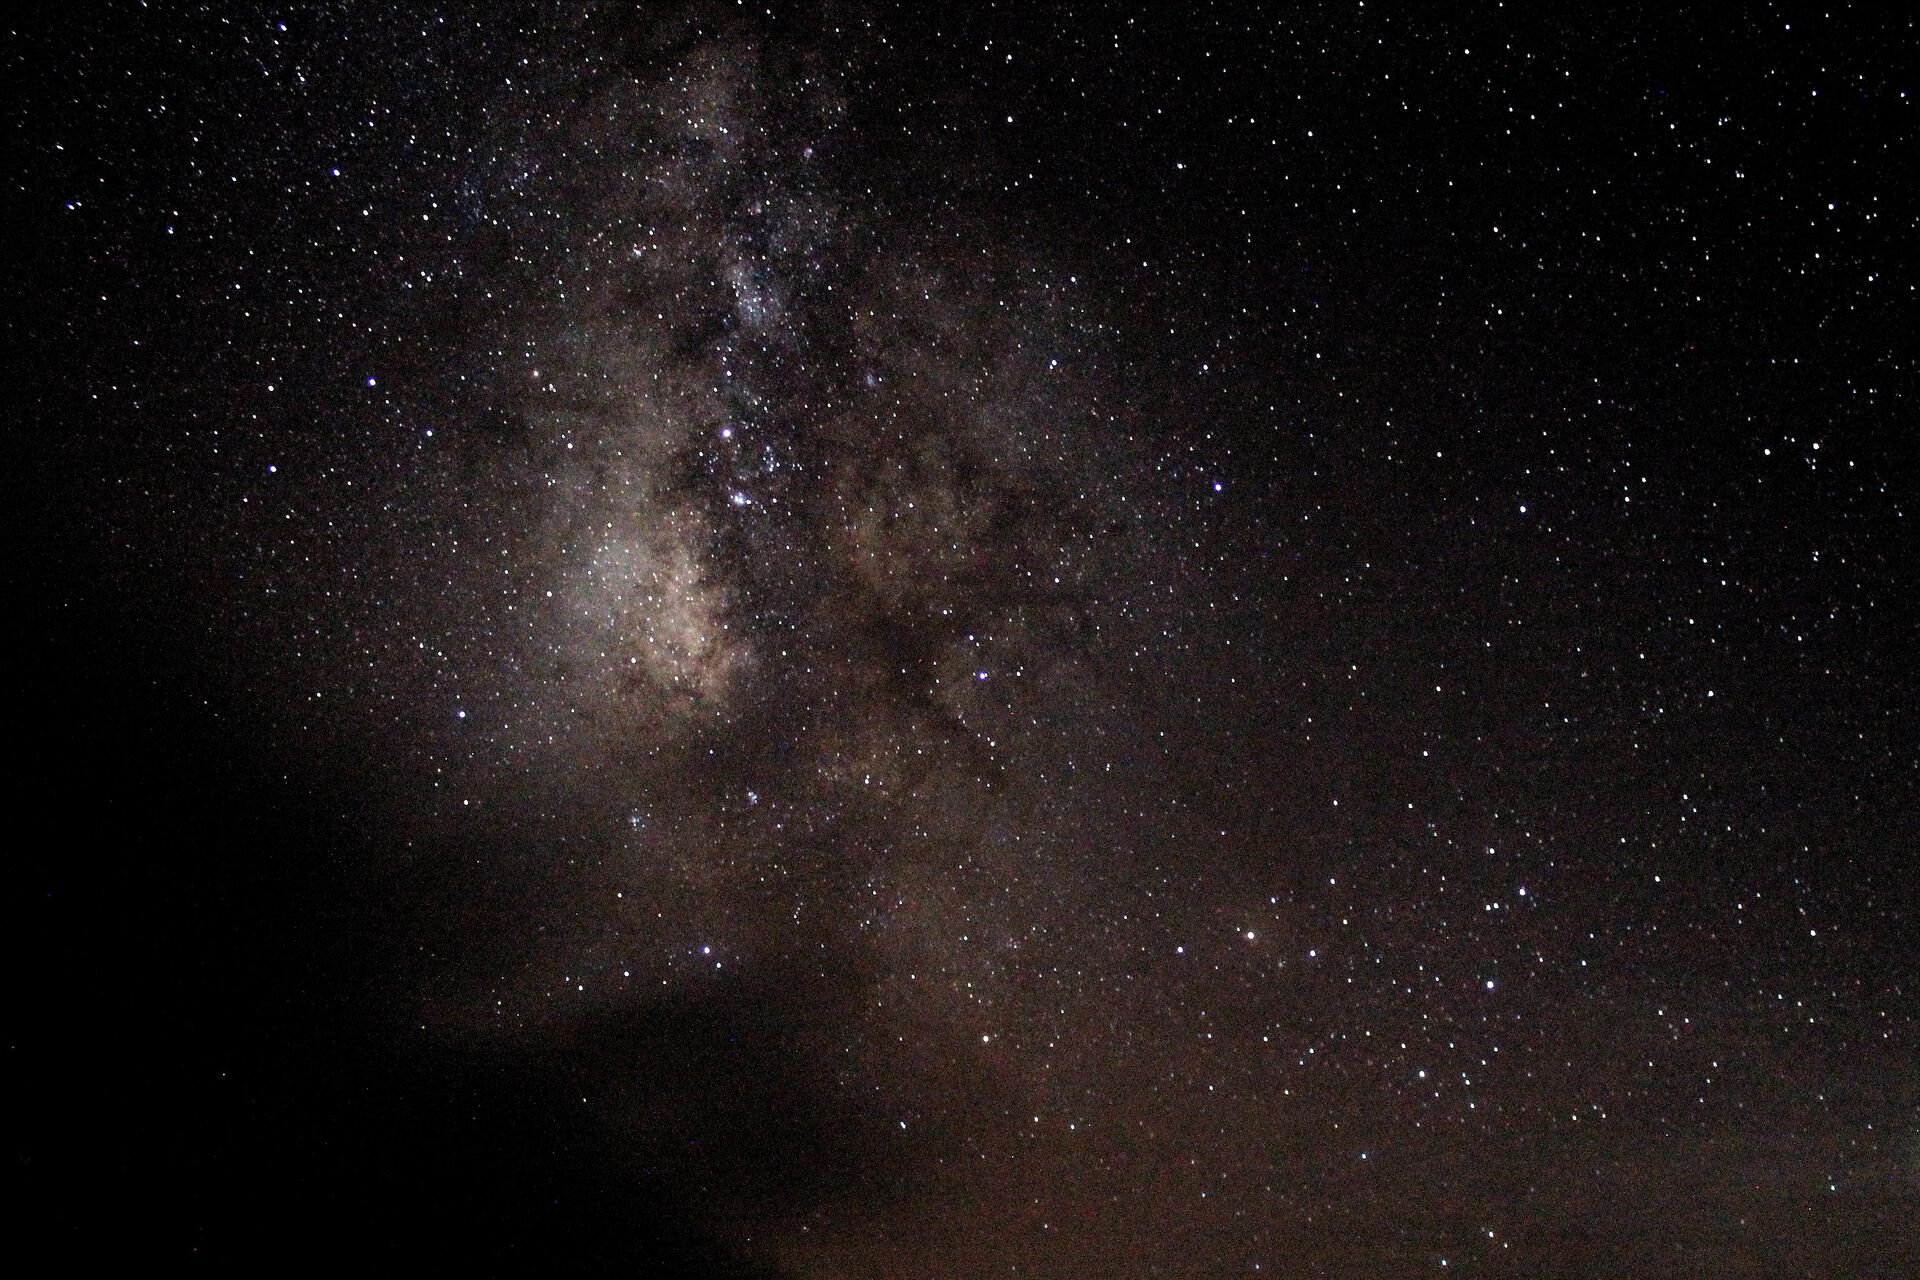 image of the Milky Way galaxy